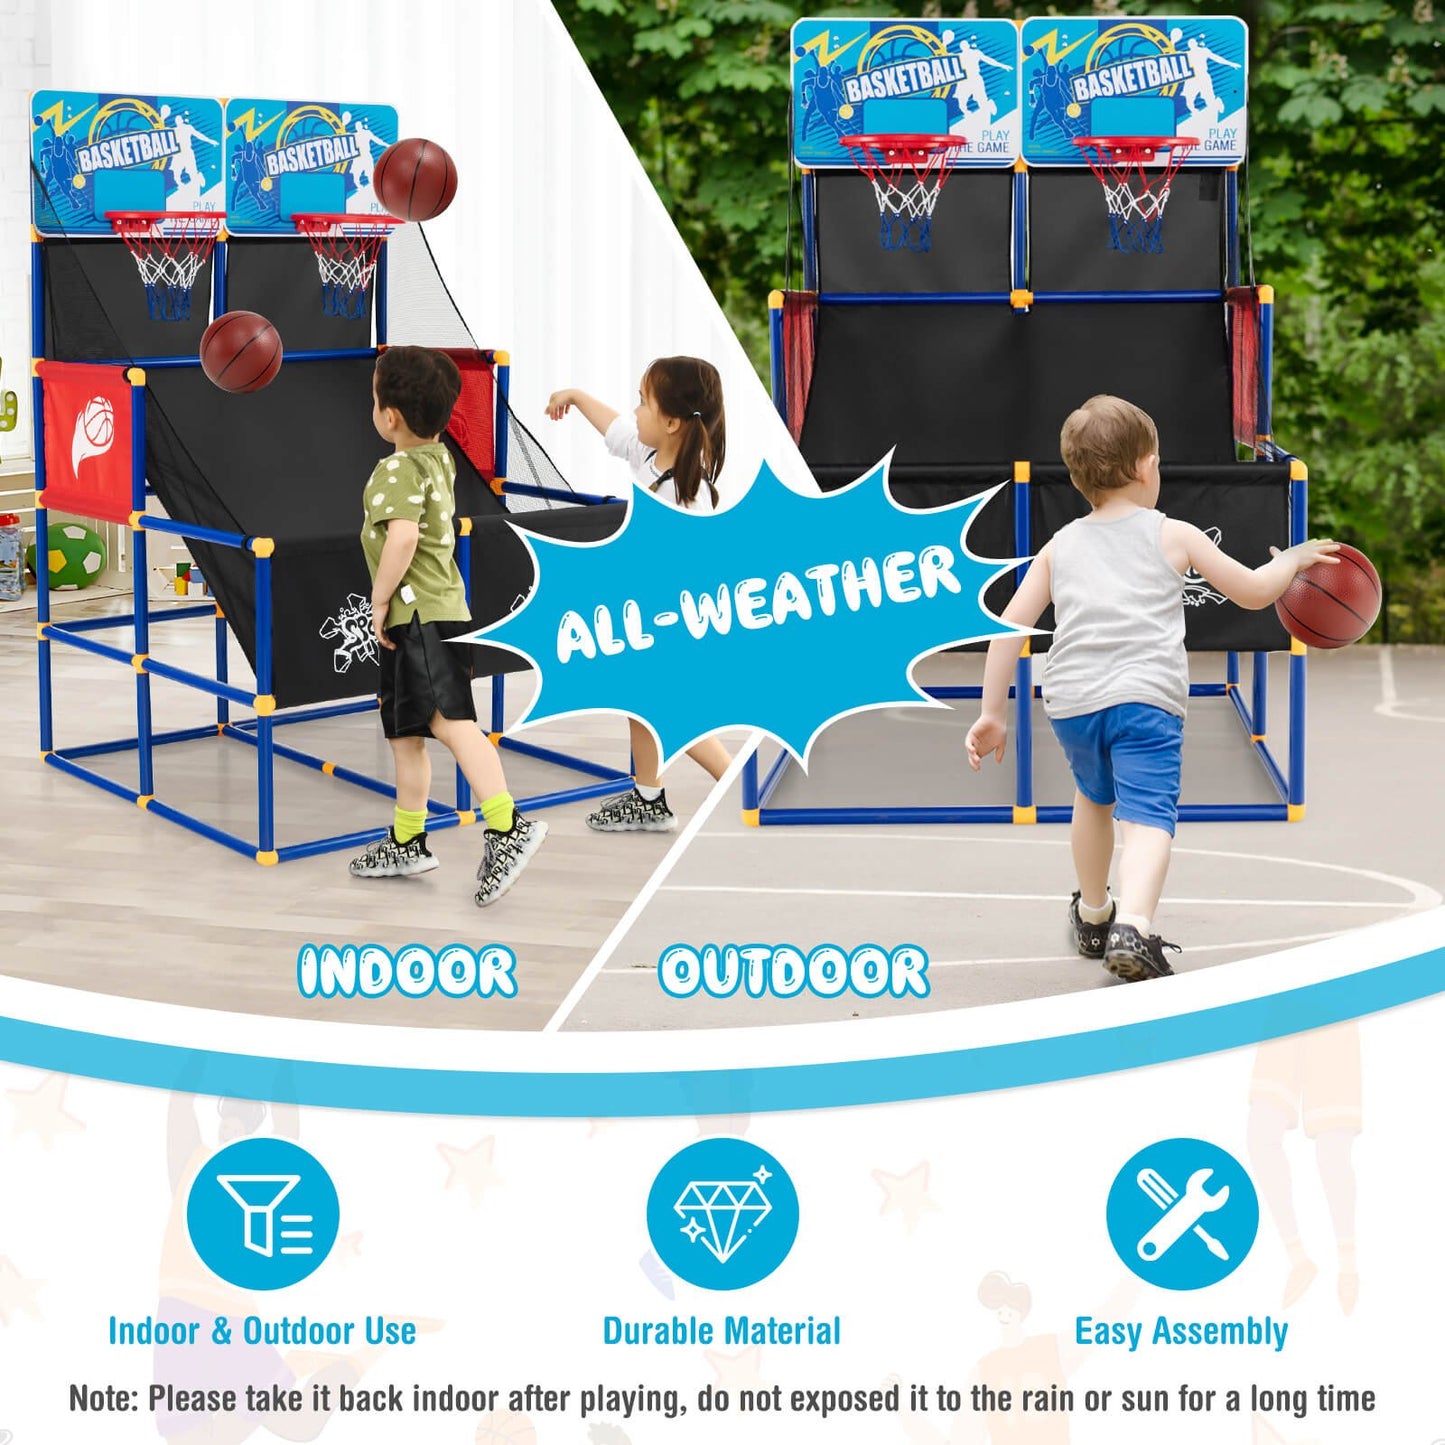 Kids Arcade Basketball Game Set with 4 Basketballs and Ball Pump, Multicolor